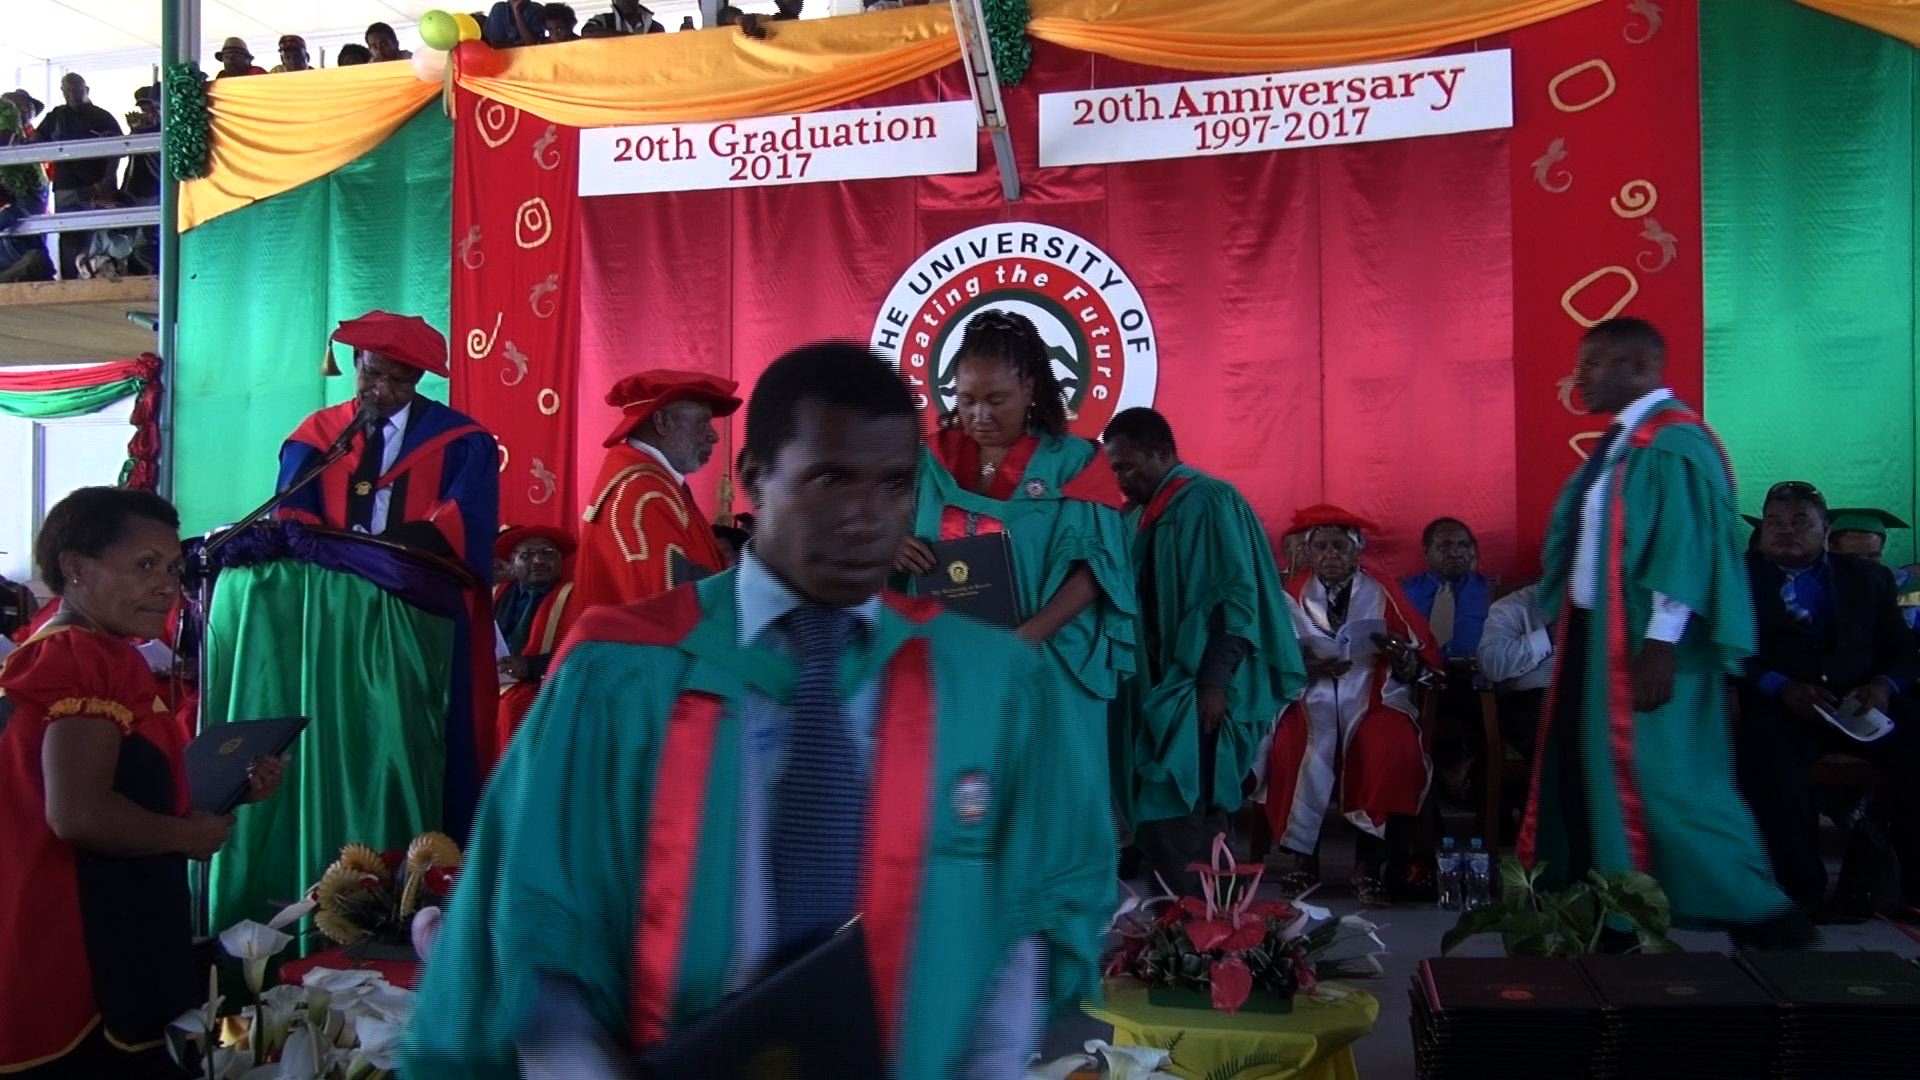 800 Graduate from the University of Goroka - EMTV Online1920 x 1080